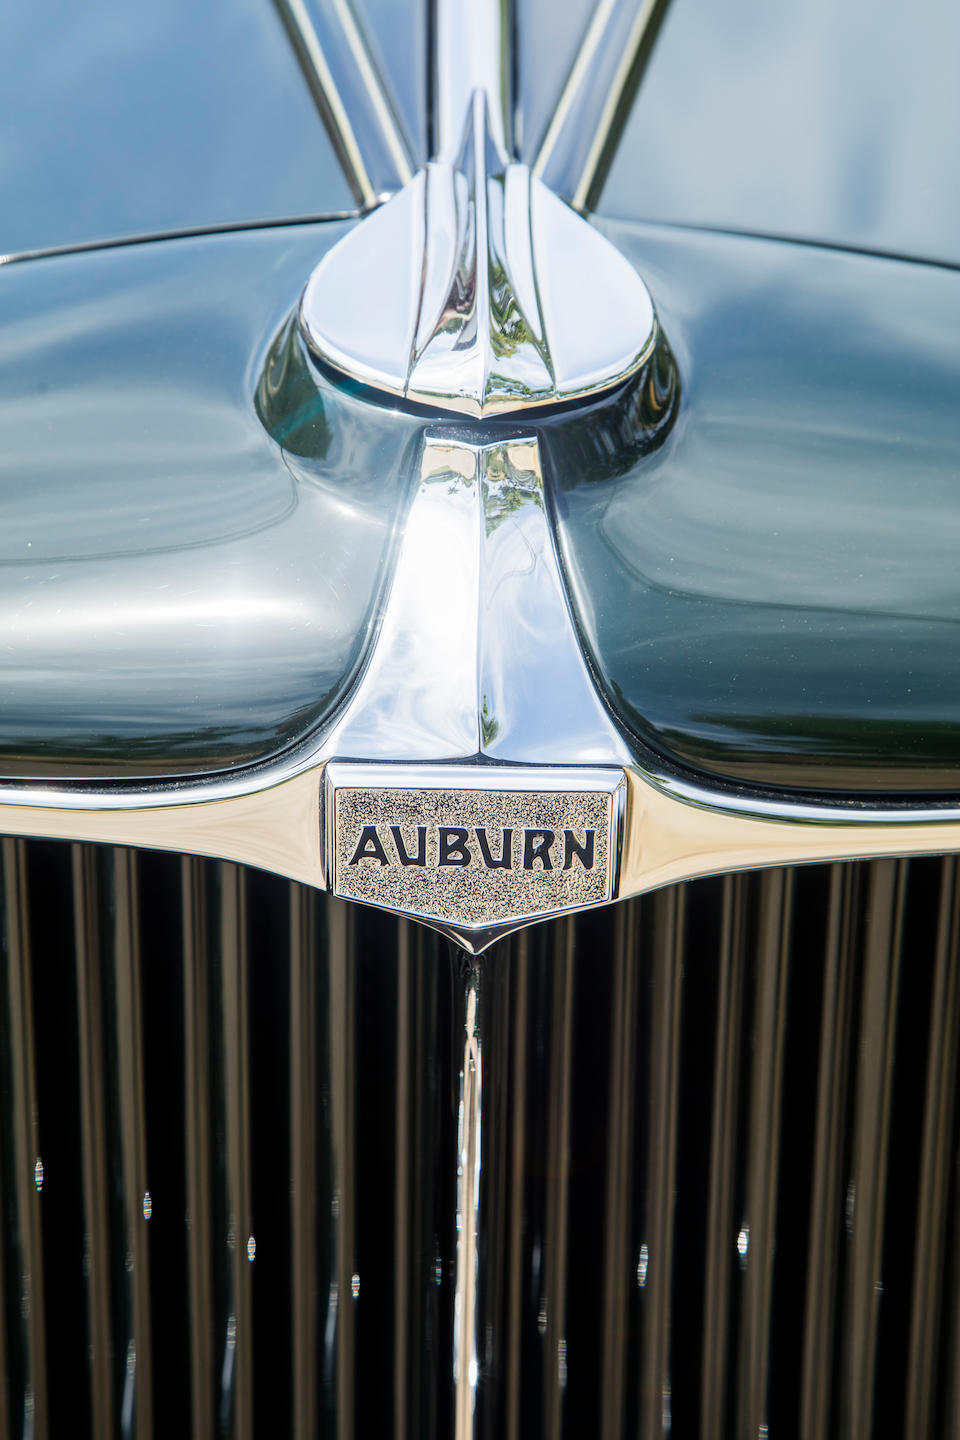 <b>1932 Auburn 12-160A Boattail Speedster</b><br />Chassis no. 12-160A 1991 E<br />Engine no. BB 1216